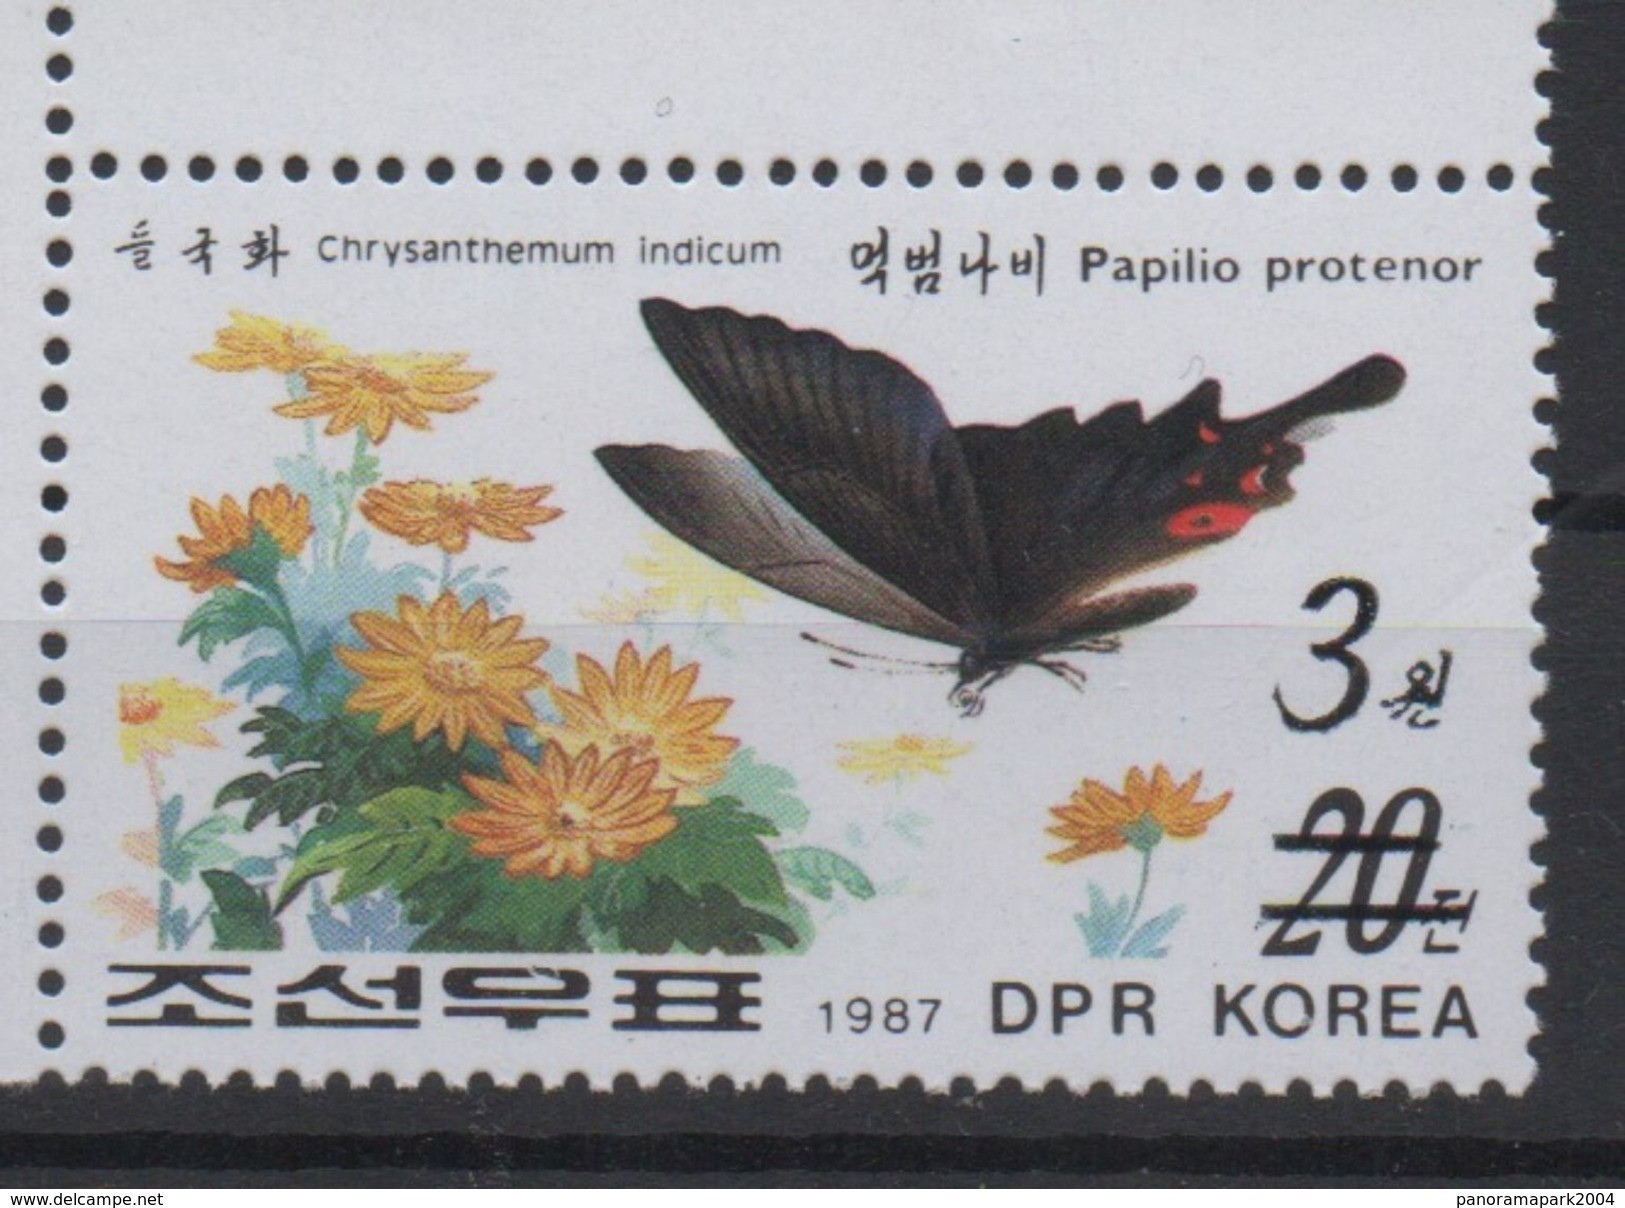 North Korea Coréd Du Nord 2006 Mi. 5048 Surchargé OVERPRINT Faune Fauna Papillon Schmetterling Butterfly Moth MNH** RARE - Mariposas